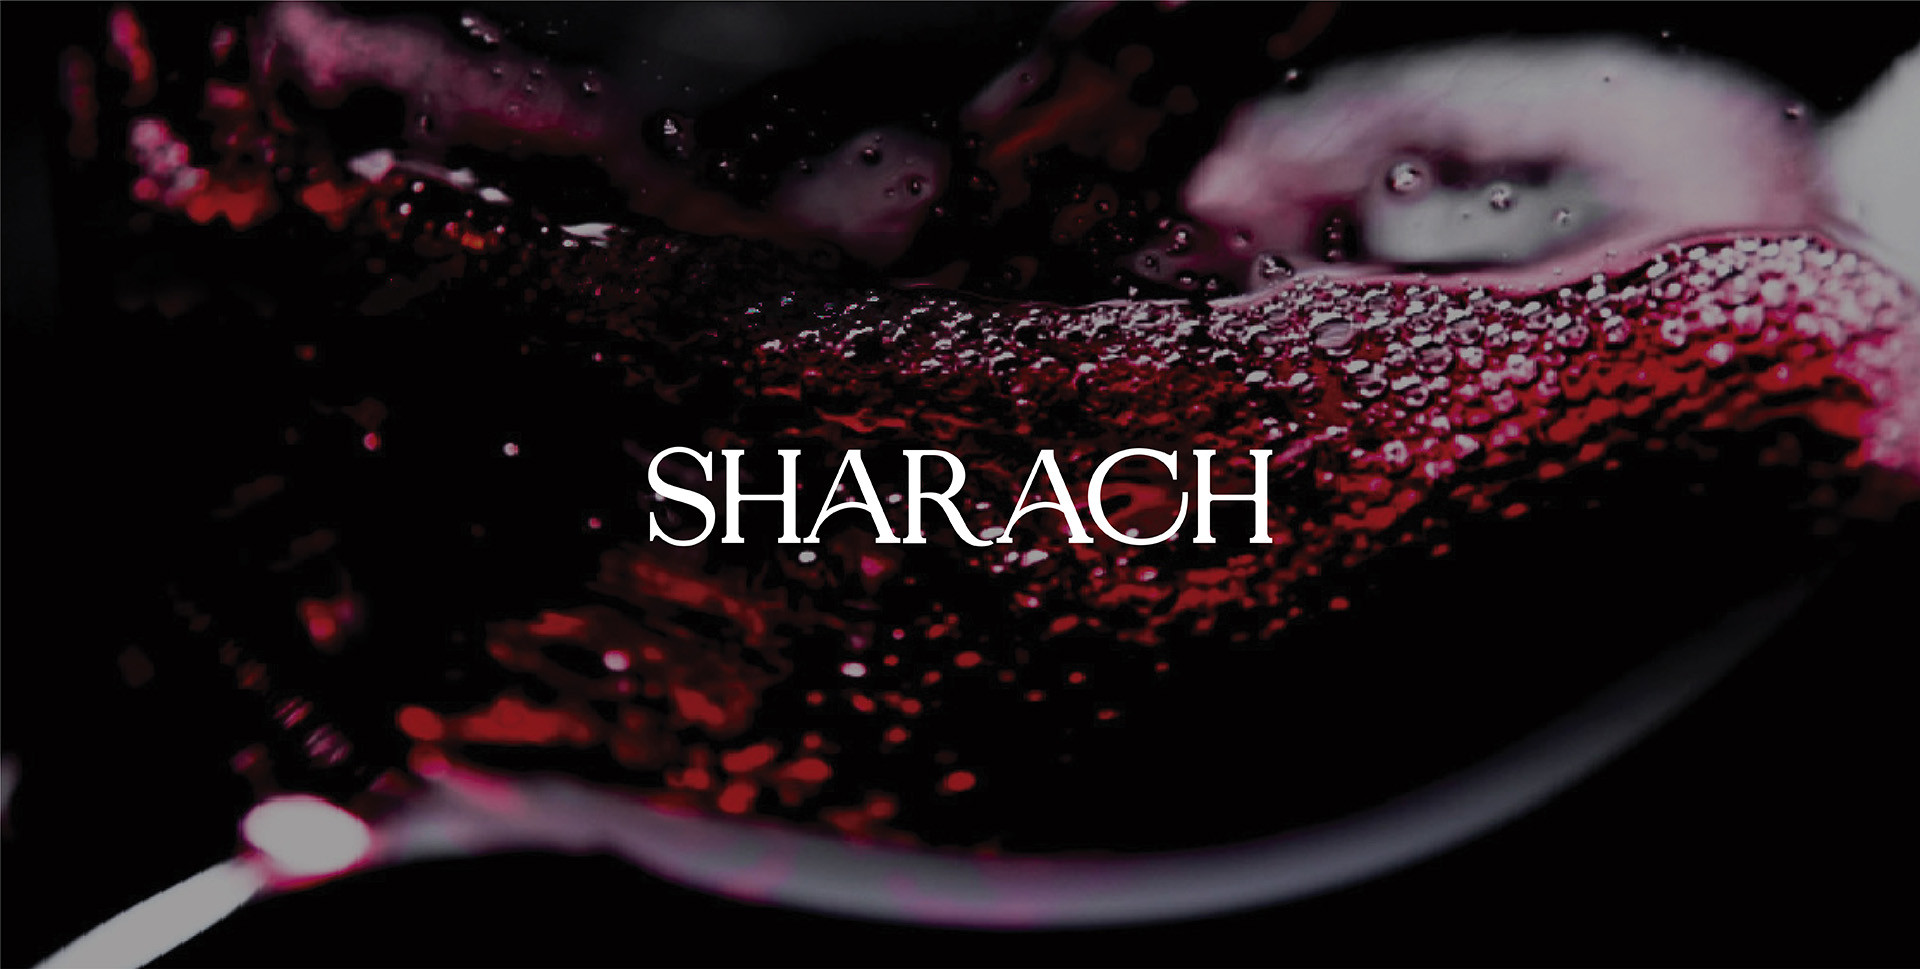 Sharach